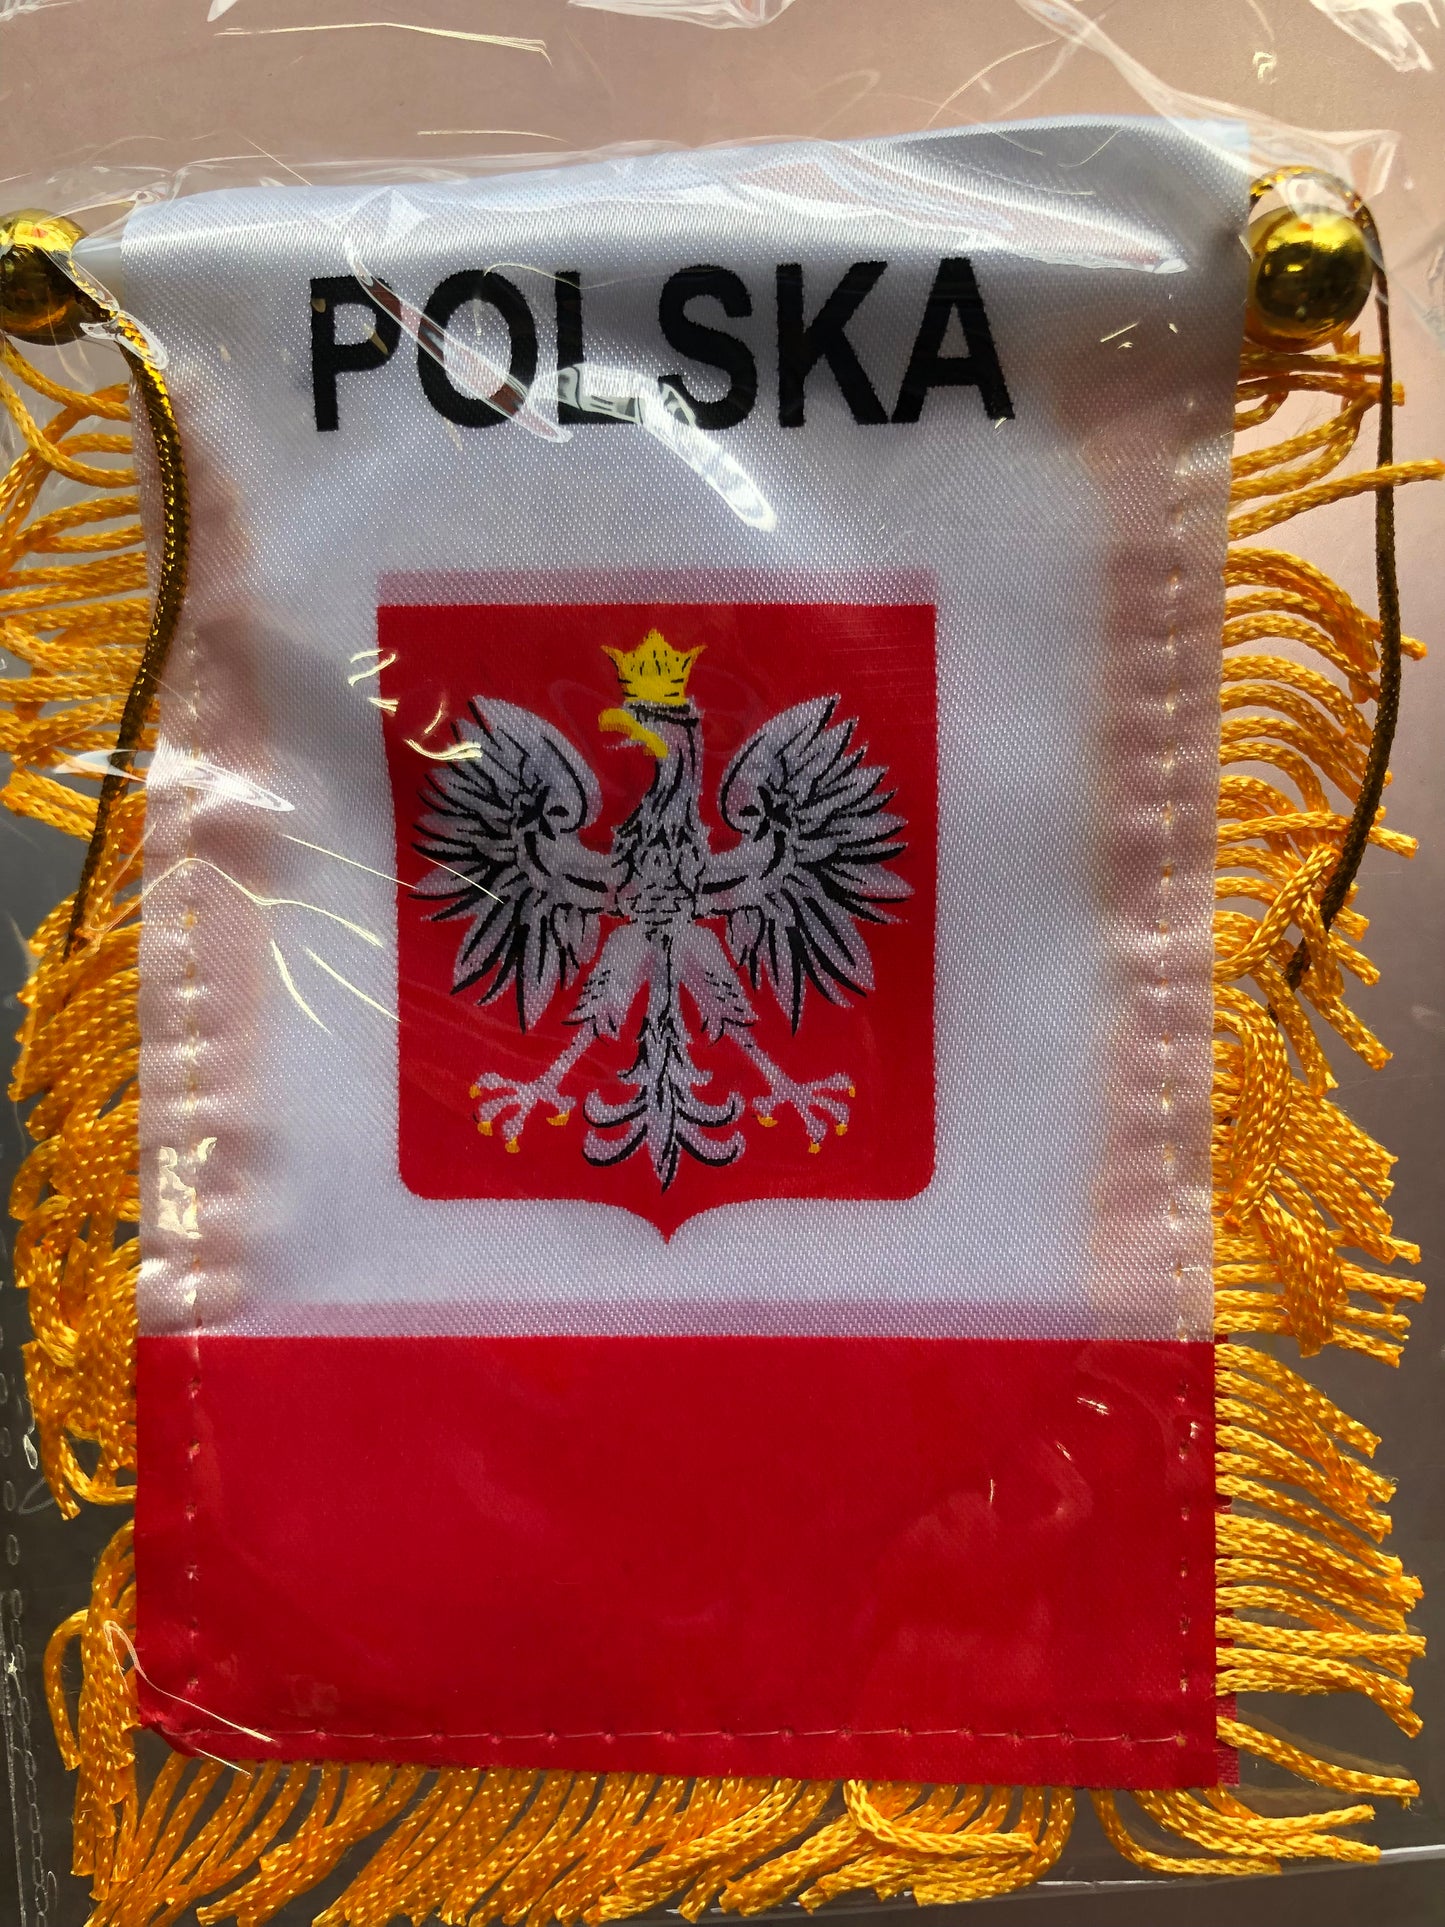 Poland Polish Polska banner mini flag w/ suction cup car window hanger 4"x6"in